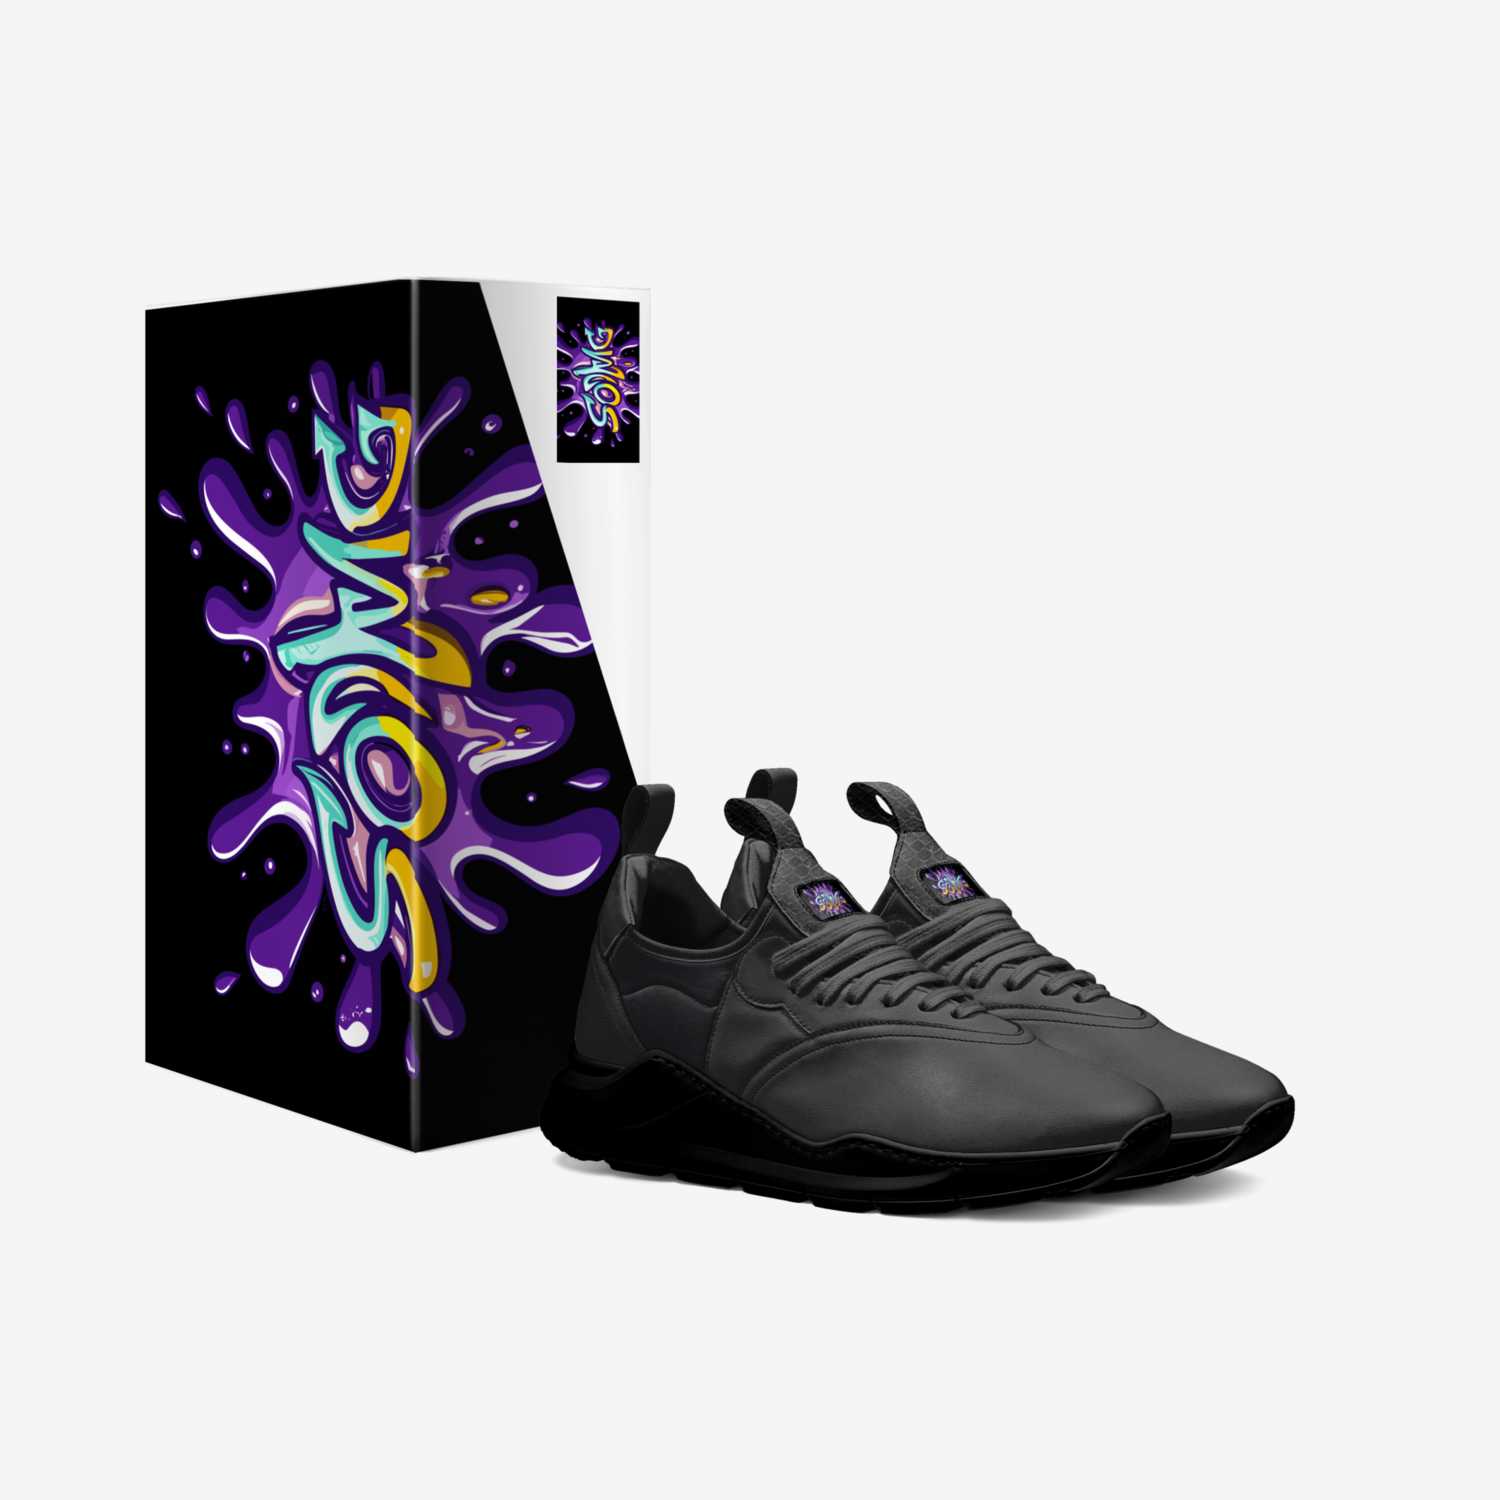 SODMG Brand custom made in Italy shoes by Sodmg Brand | Box view